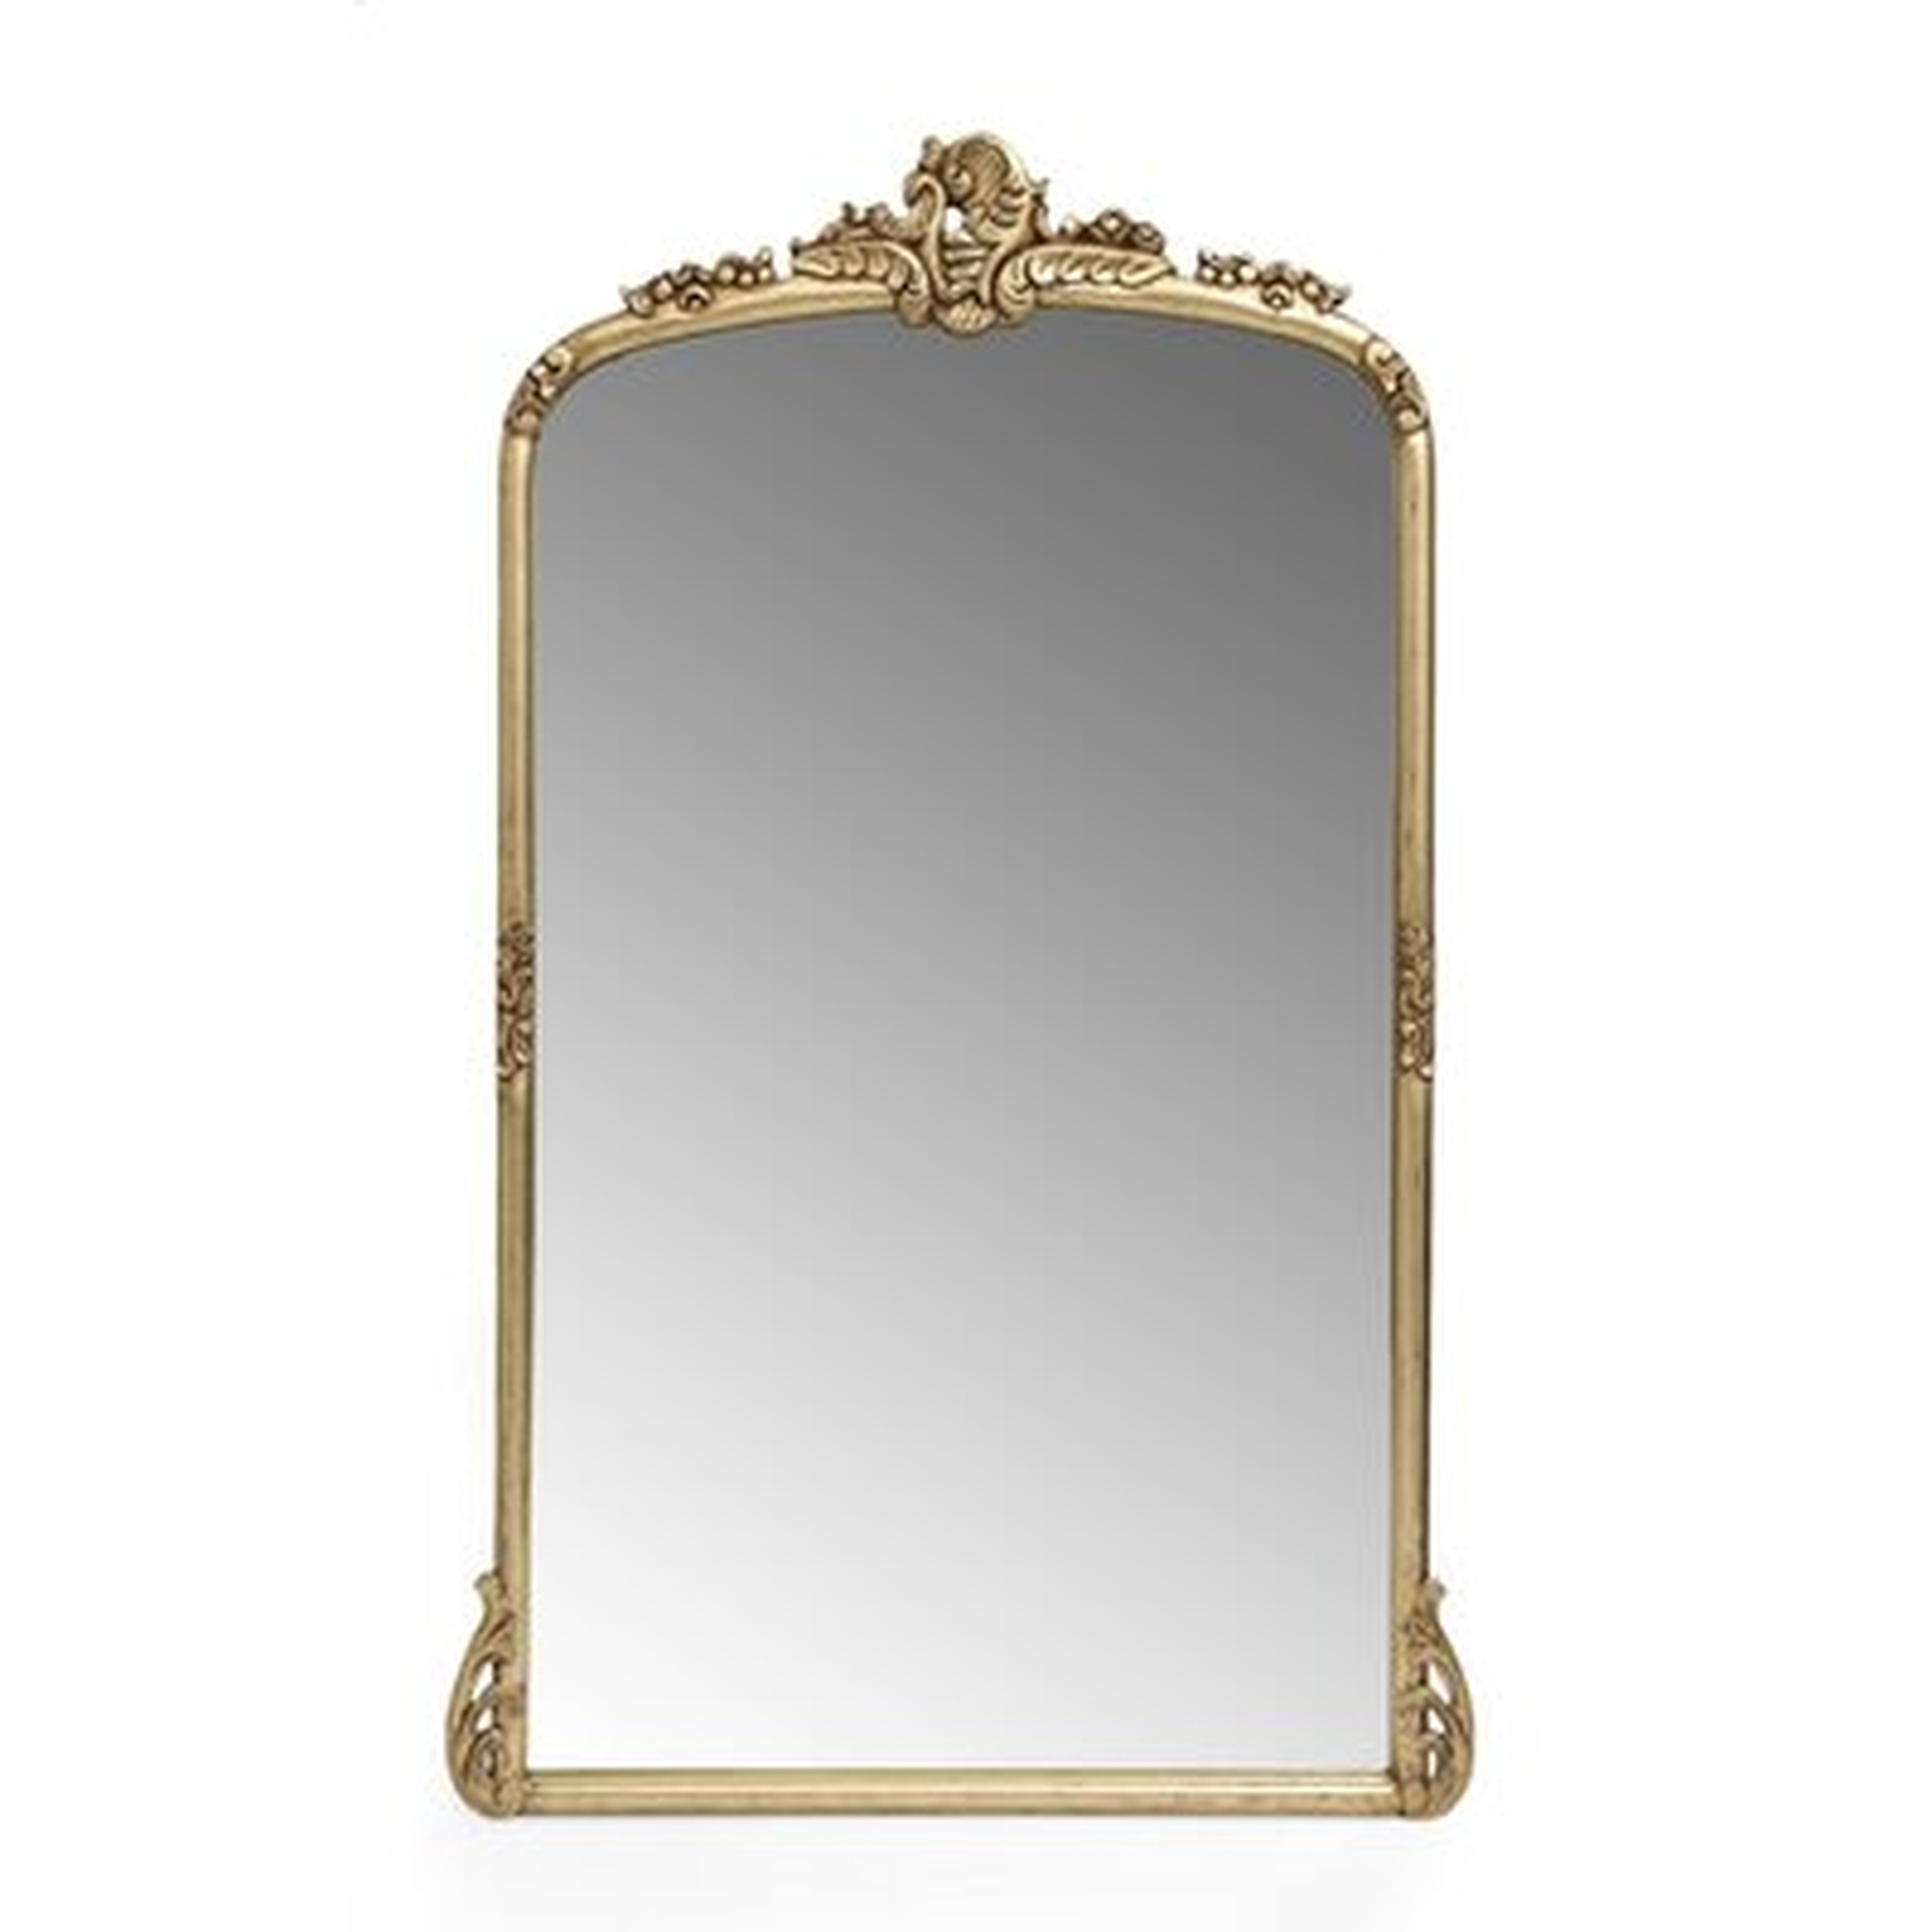 Wilsey Wood Framed Wall Mounted Overmantel Mirror, Antique Gold - Wayfair